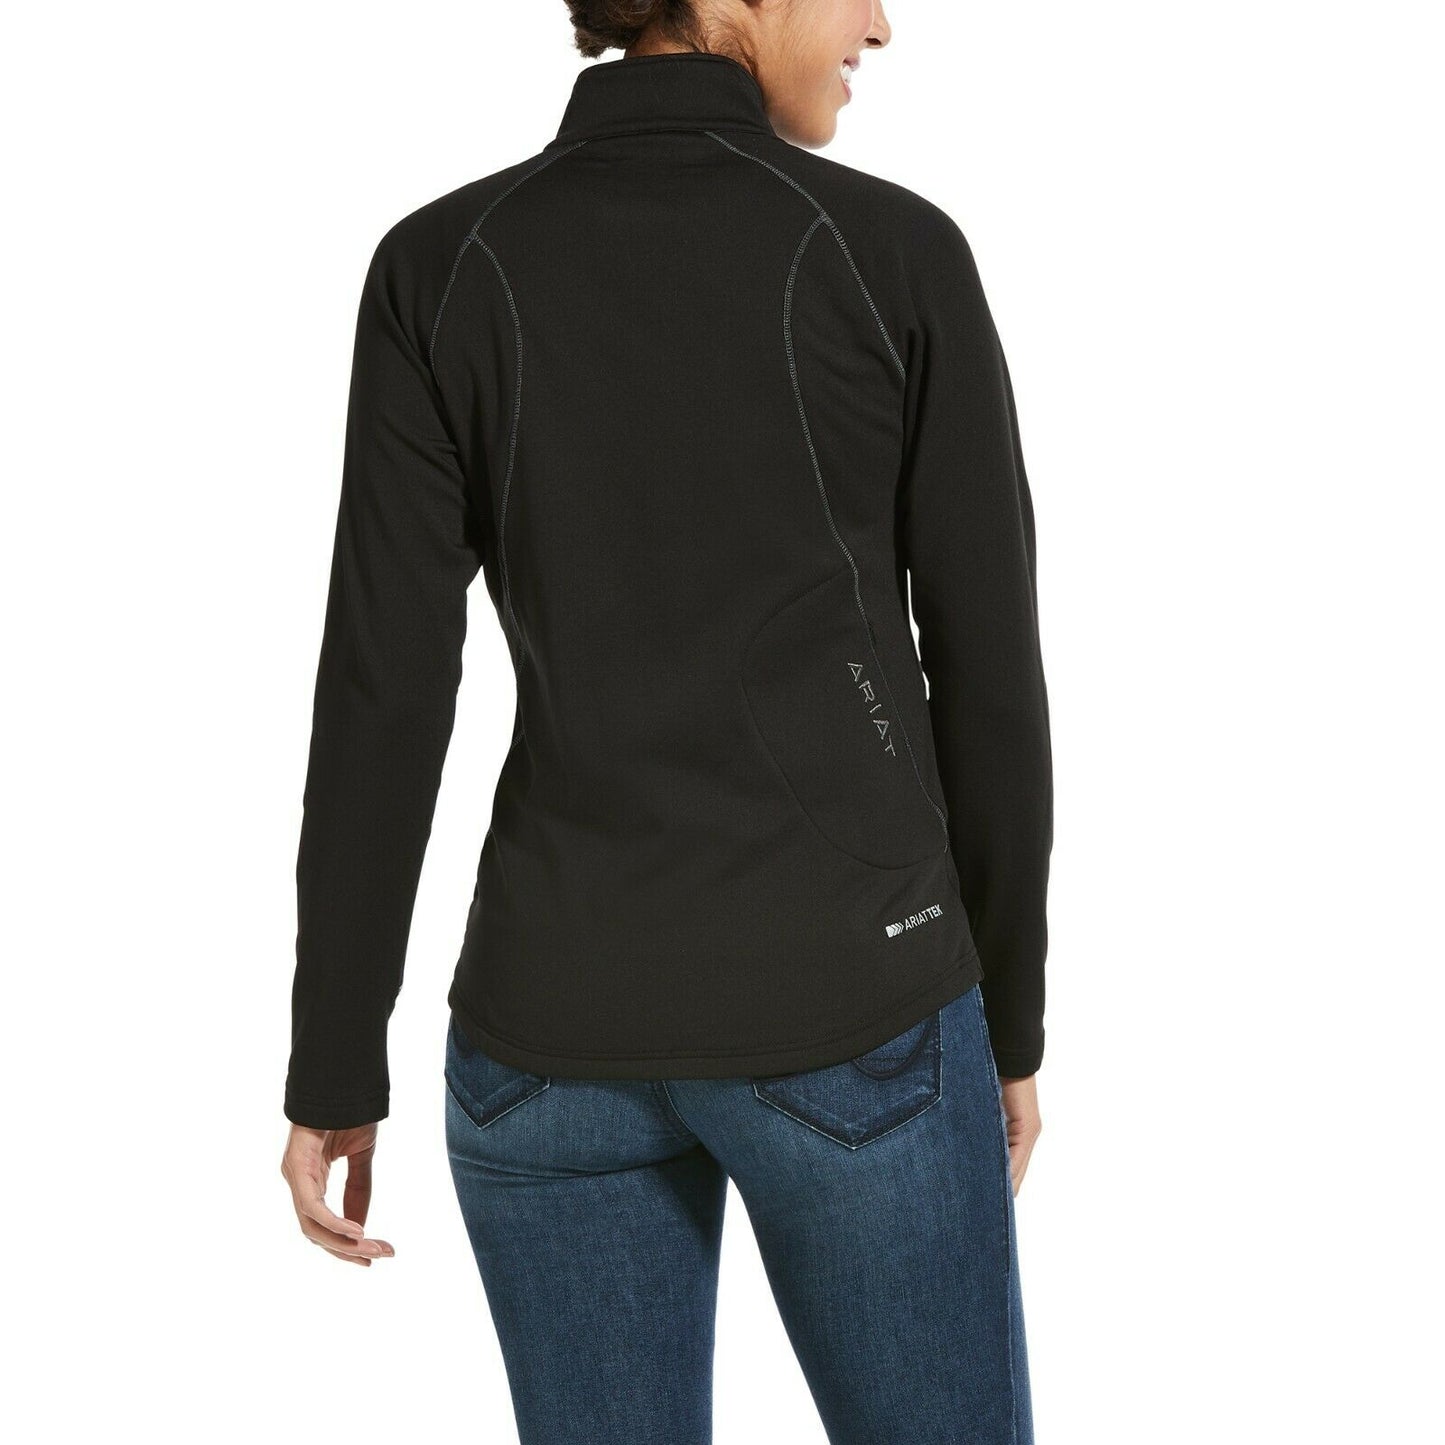 Ariat® Ladies Conquest 2.0 Black 1/2 Zip Sweatshirt 10032657